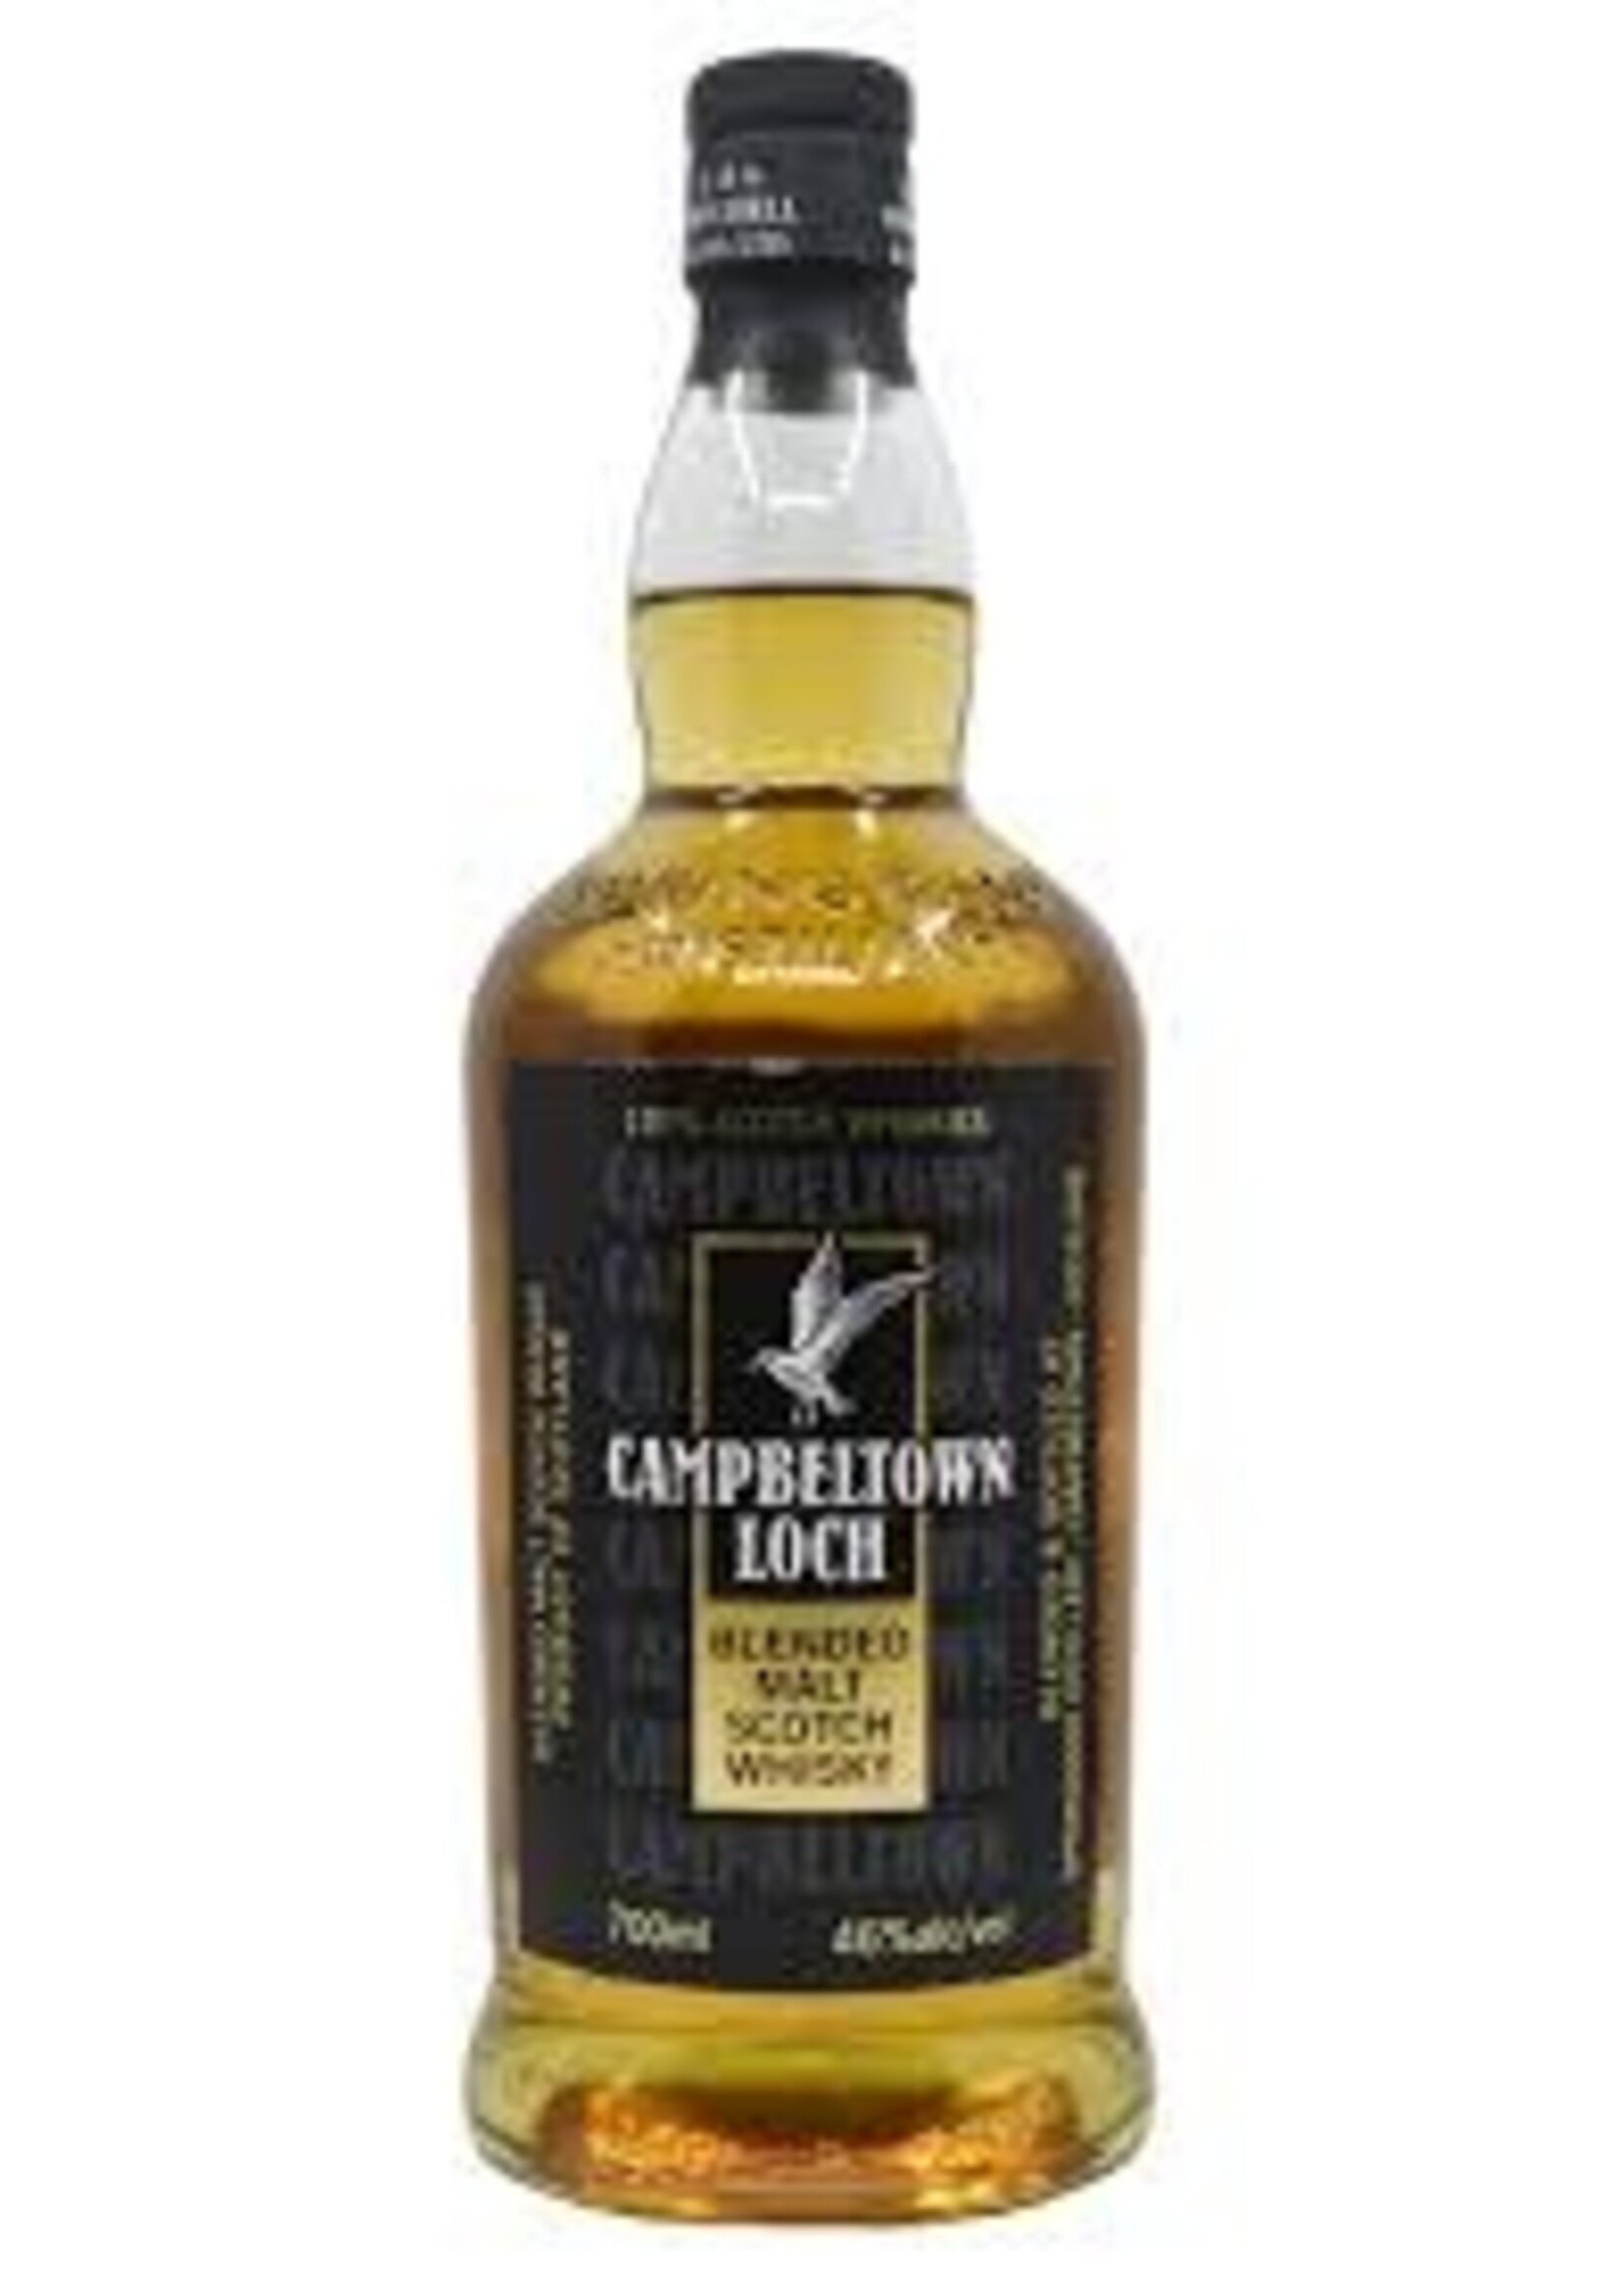 Campbeltown Loch Campbeltown Loch / Blended Scotch Whisky / 700mL